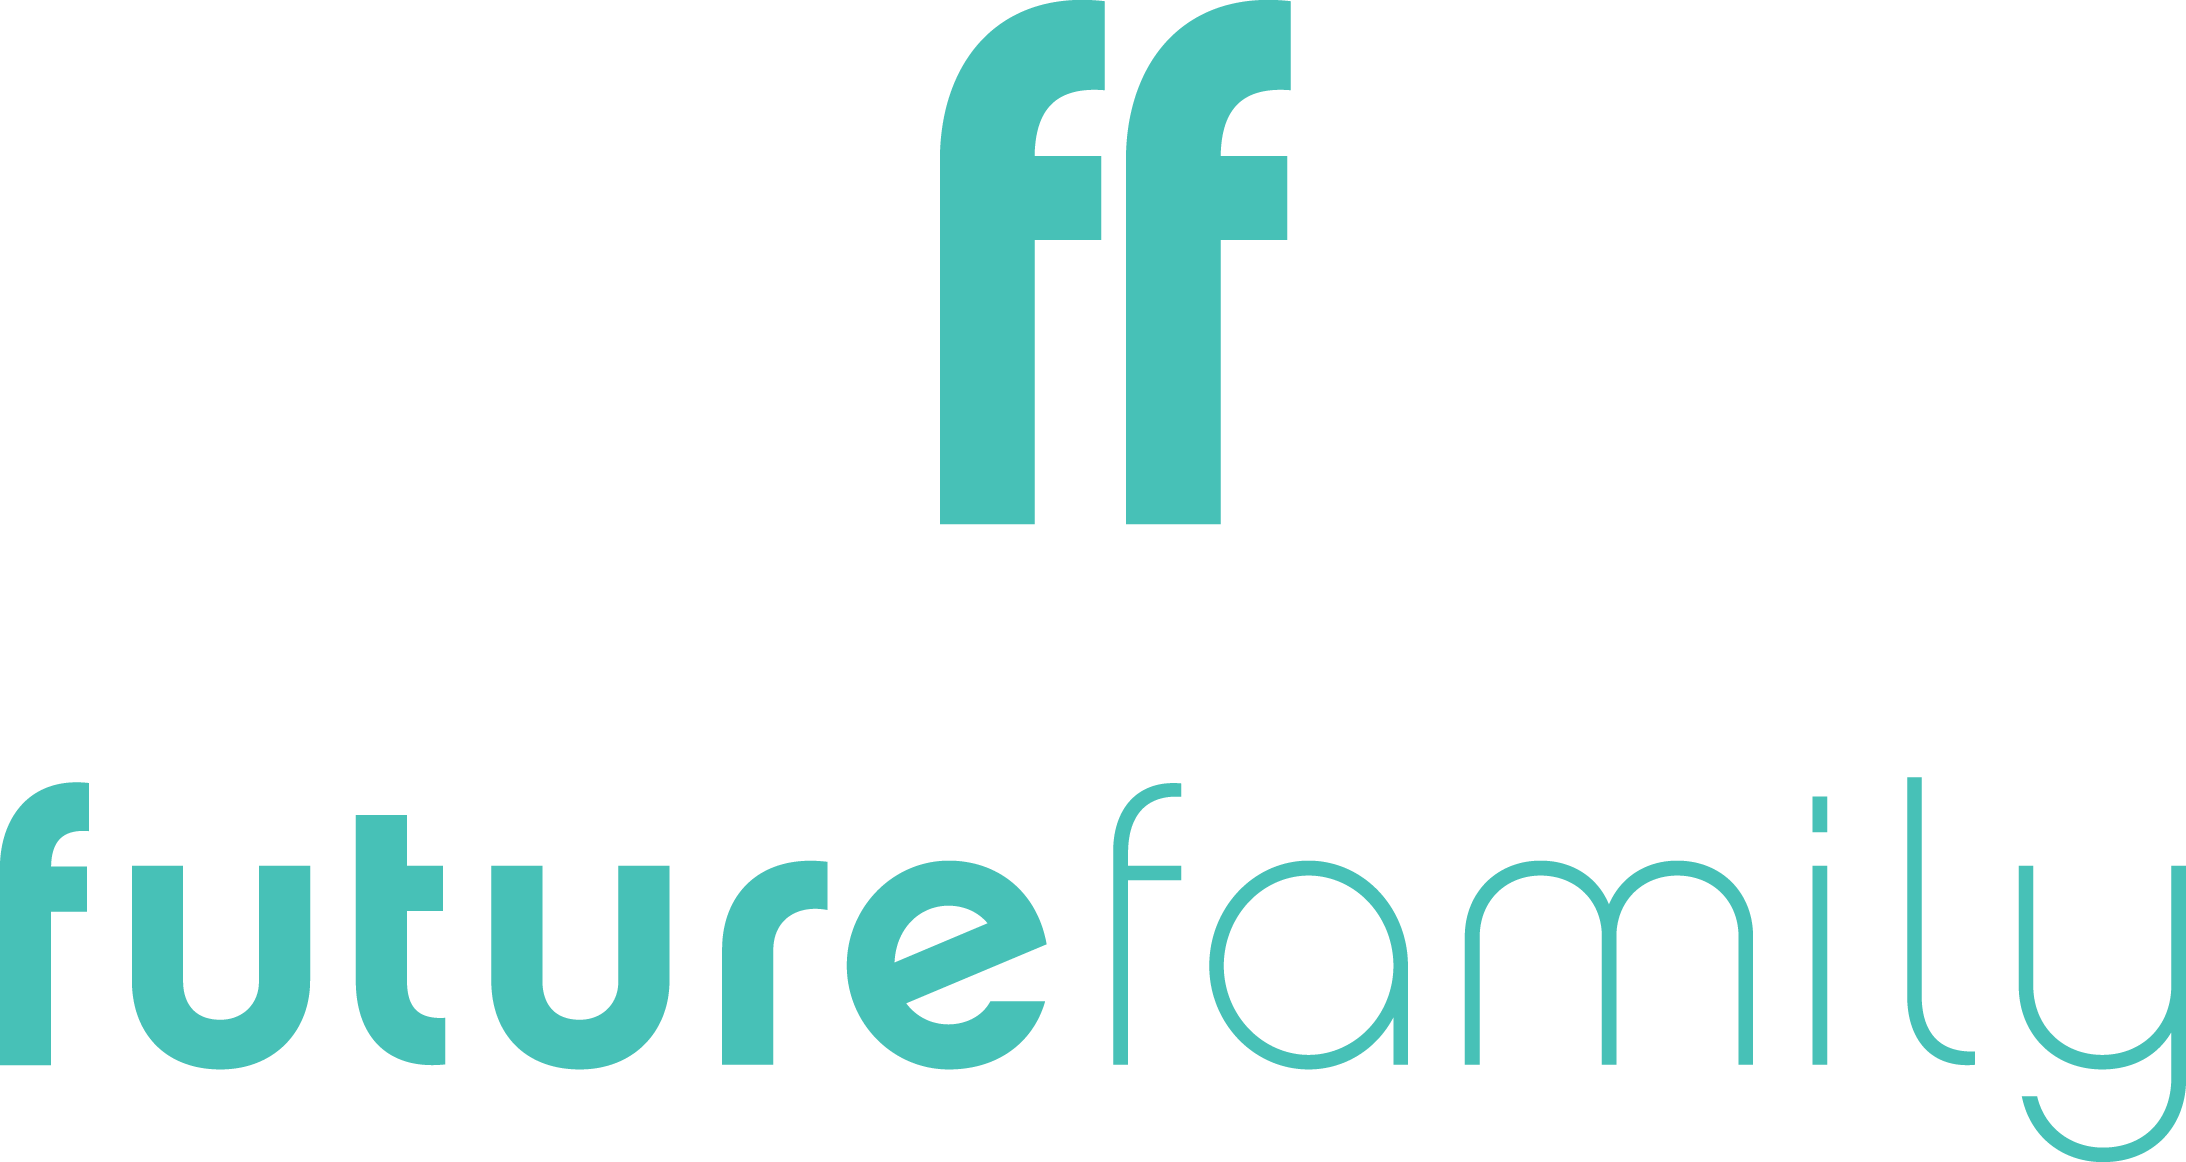 Future Family logo